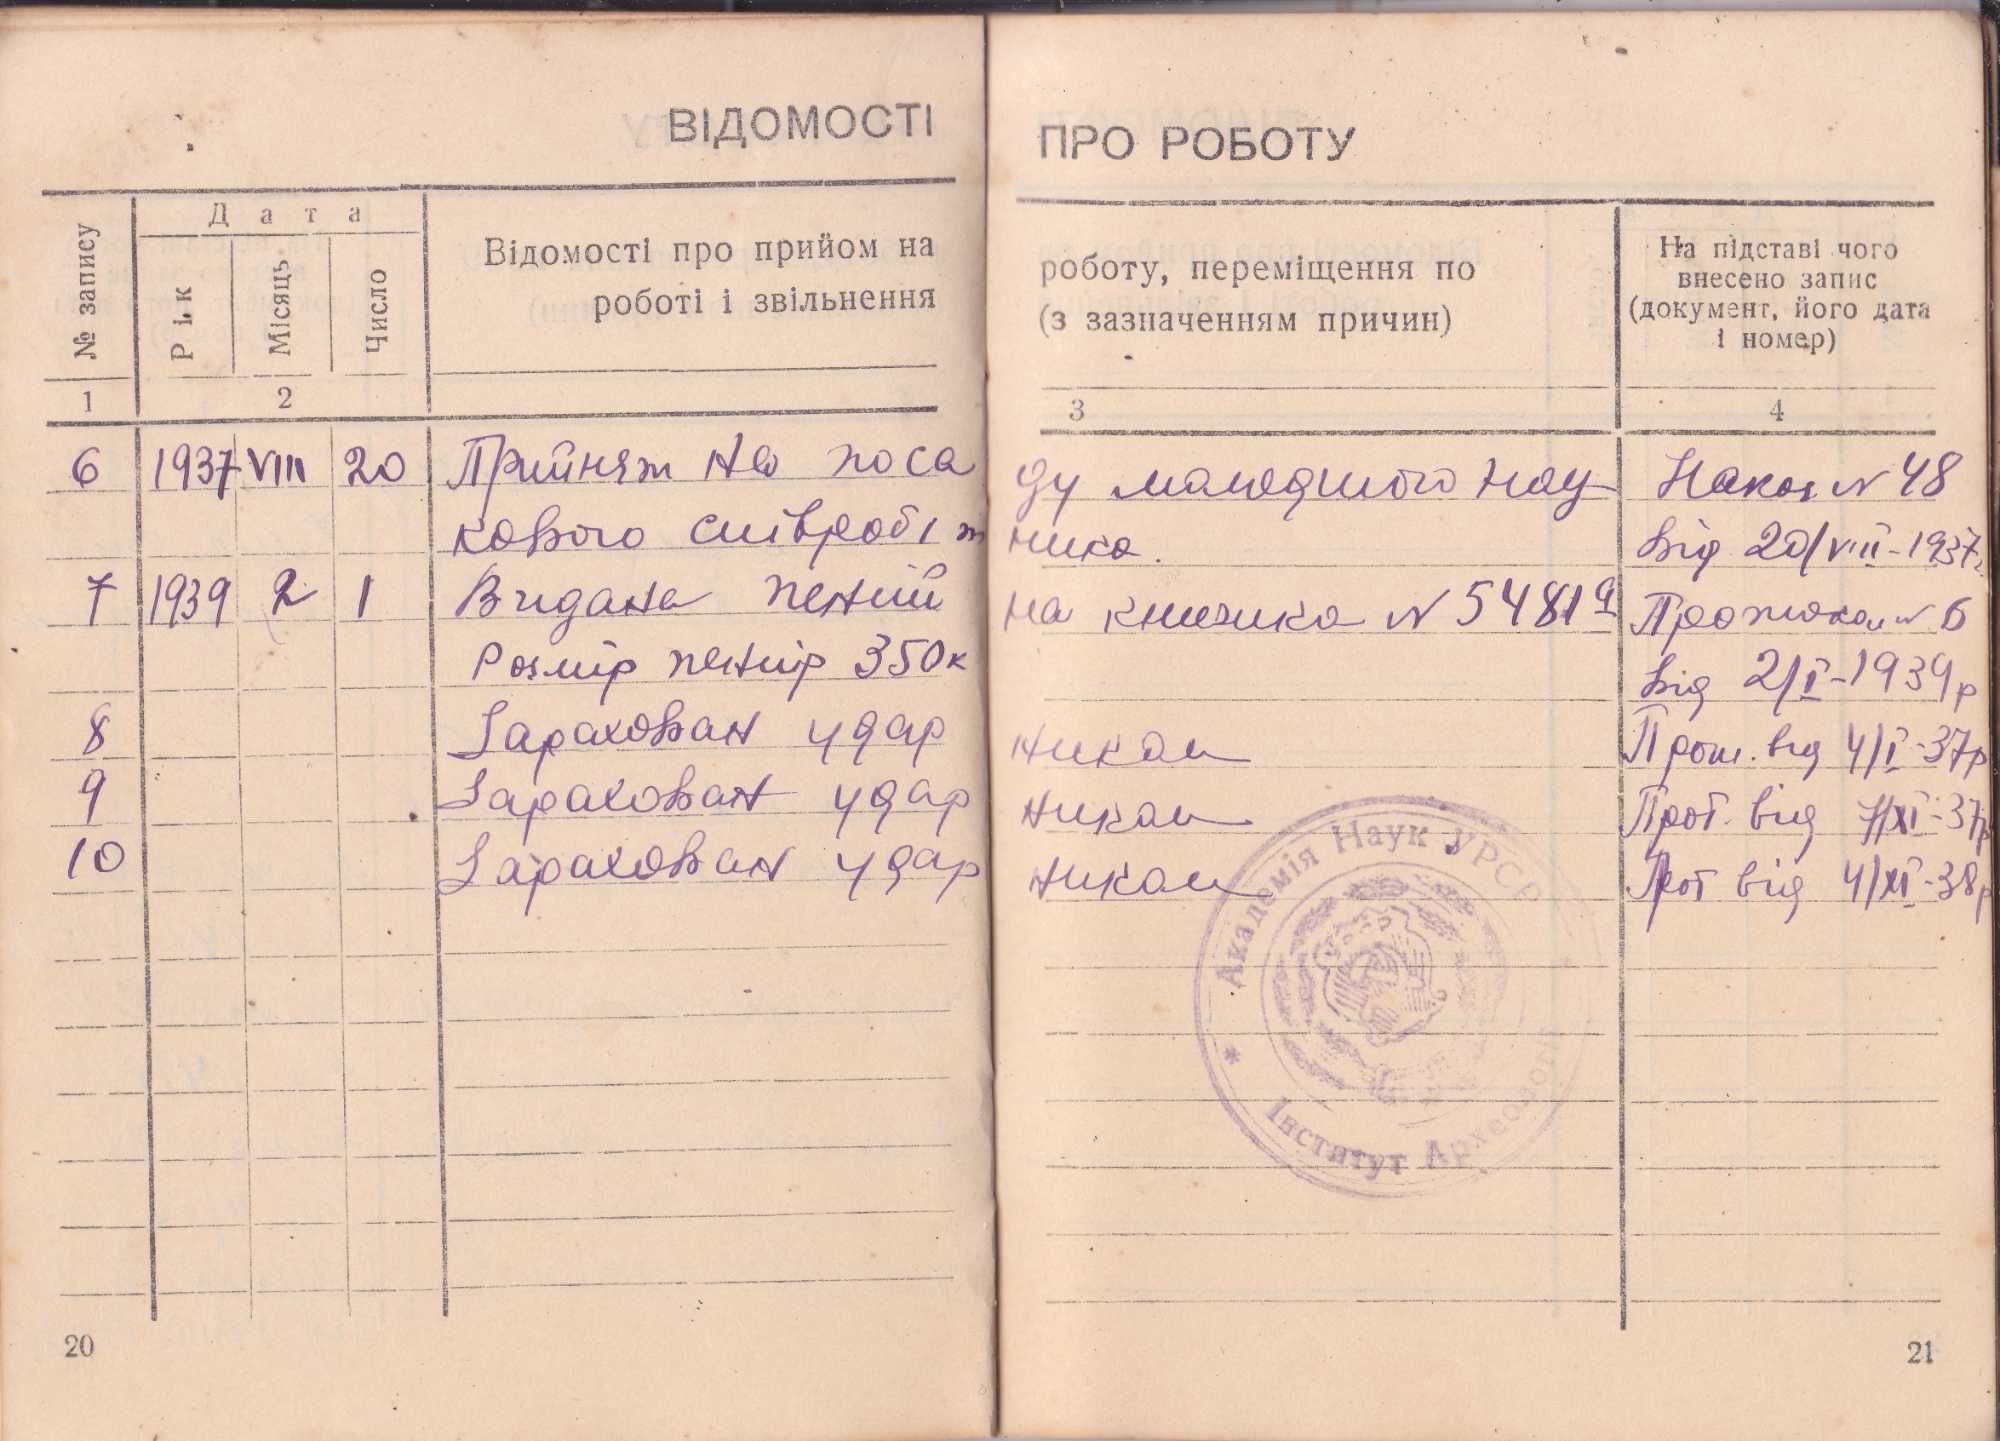 Павлович Ю.Ю. "Осень" Картина, холст, масло,1910-е гг.